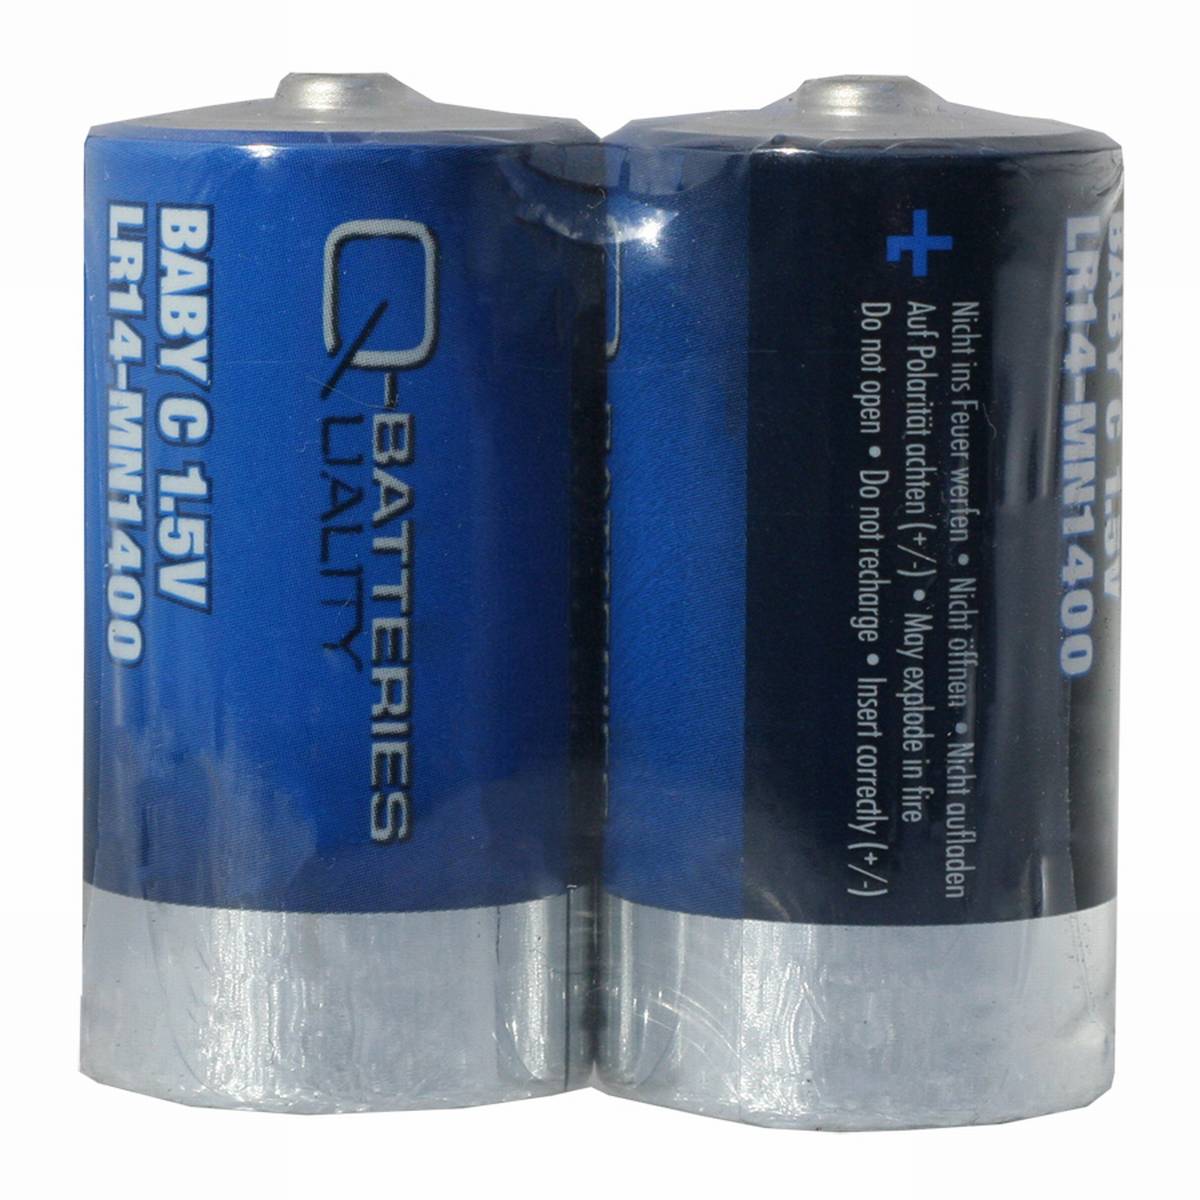 Q-Batteries Baby Battery LR14 C 1.5V Alkaline Cells (foglio di 2)